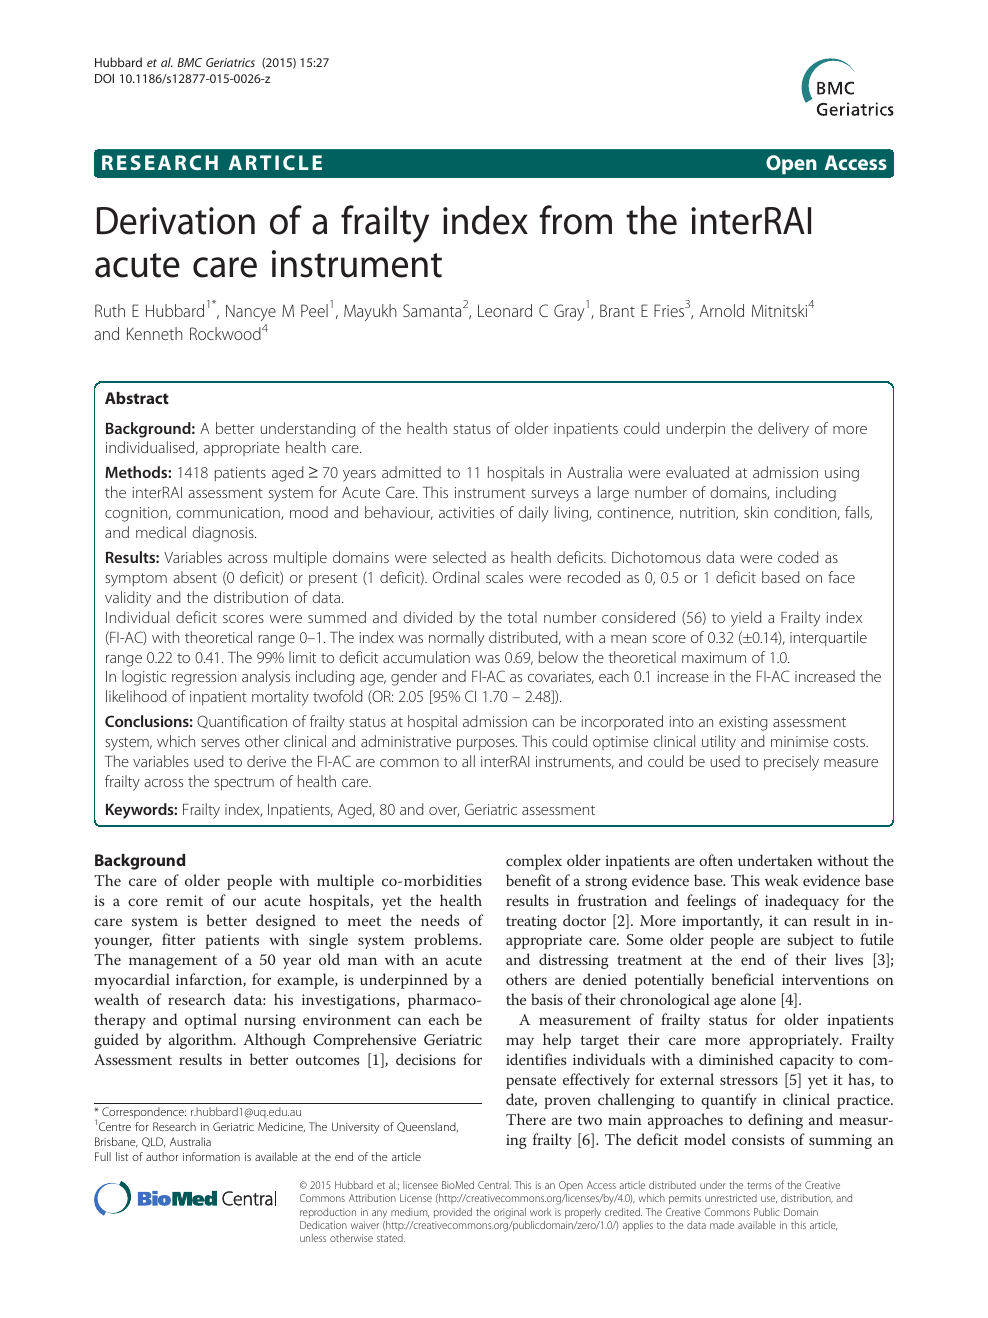 Clinical Frailty Scale - Geriatric Medicine Research - Dalhousie University